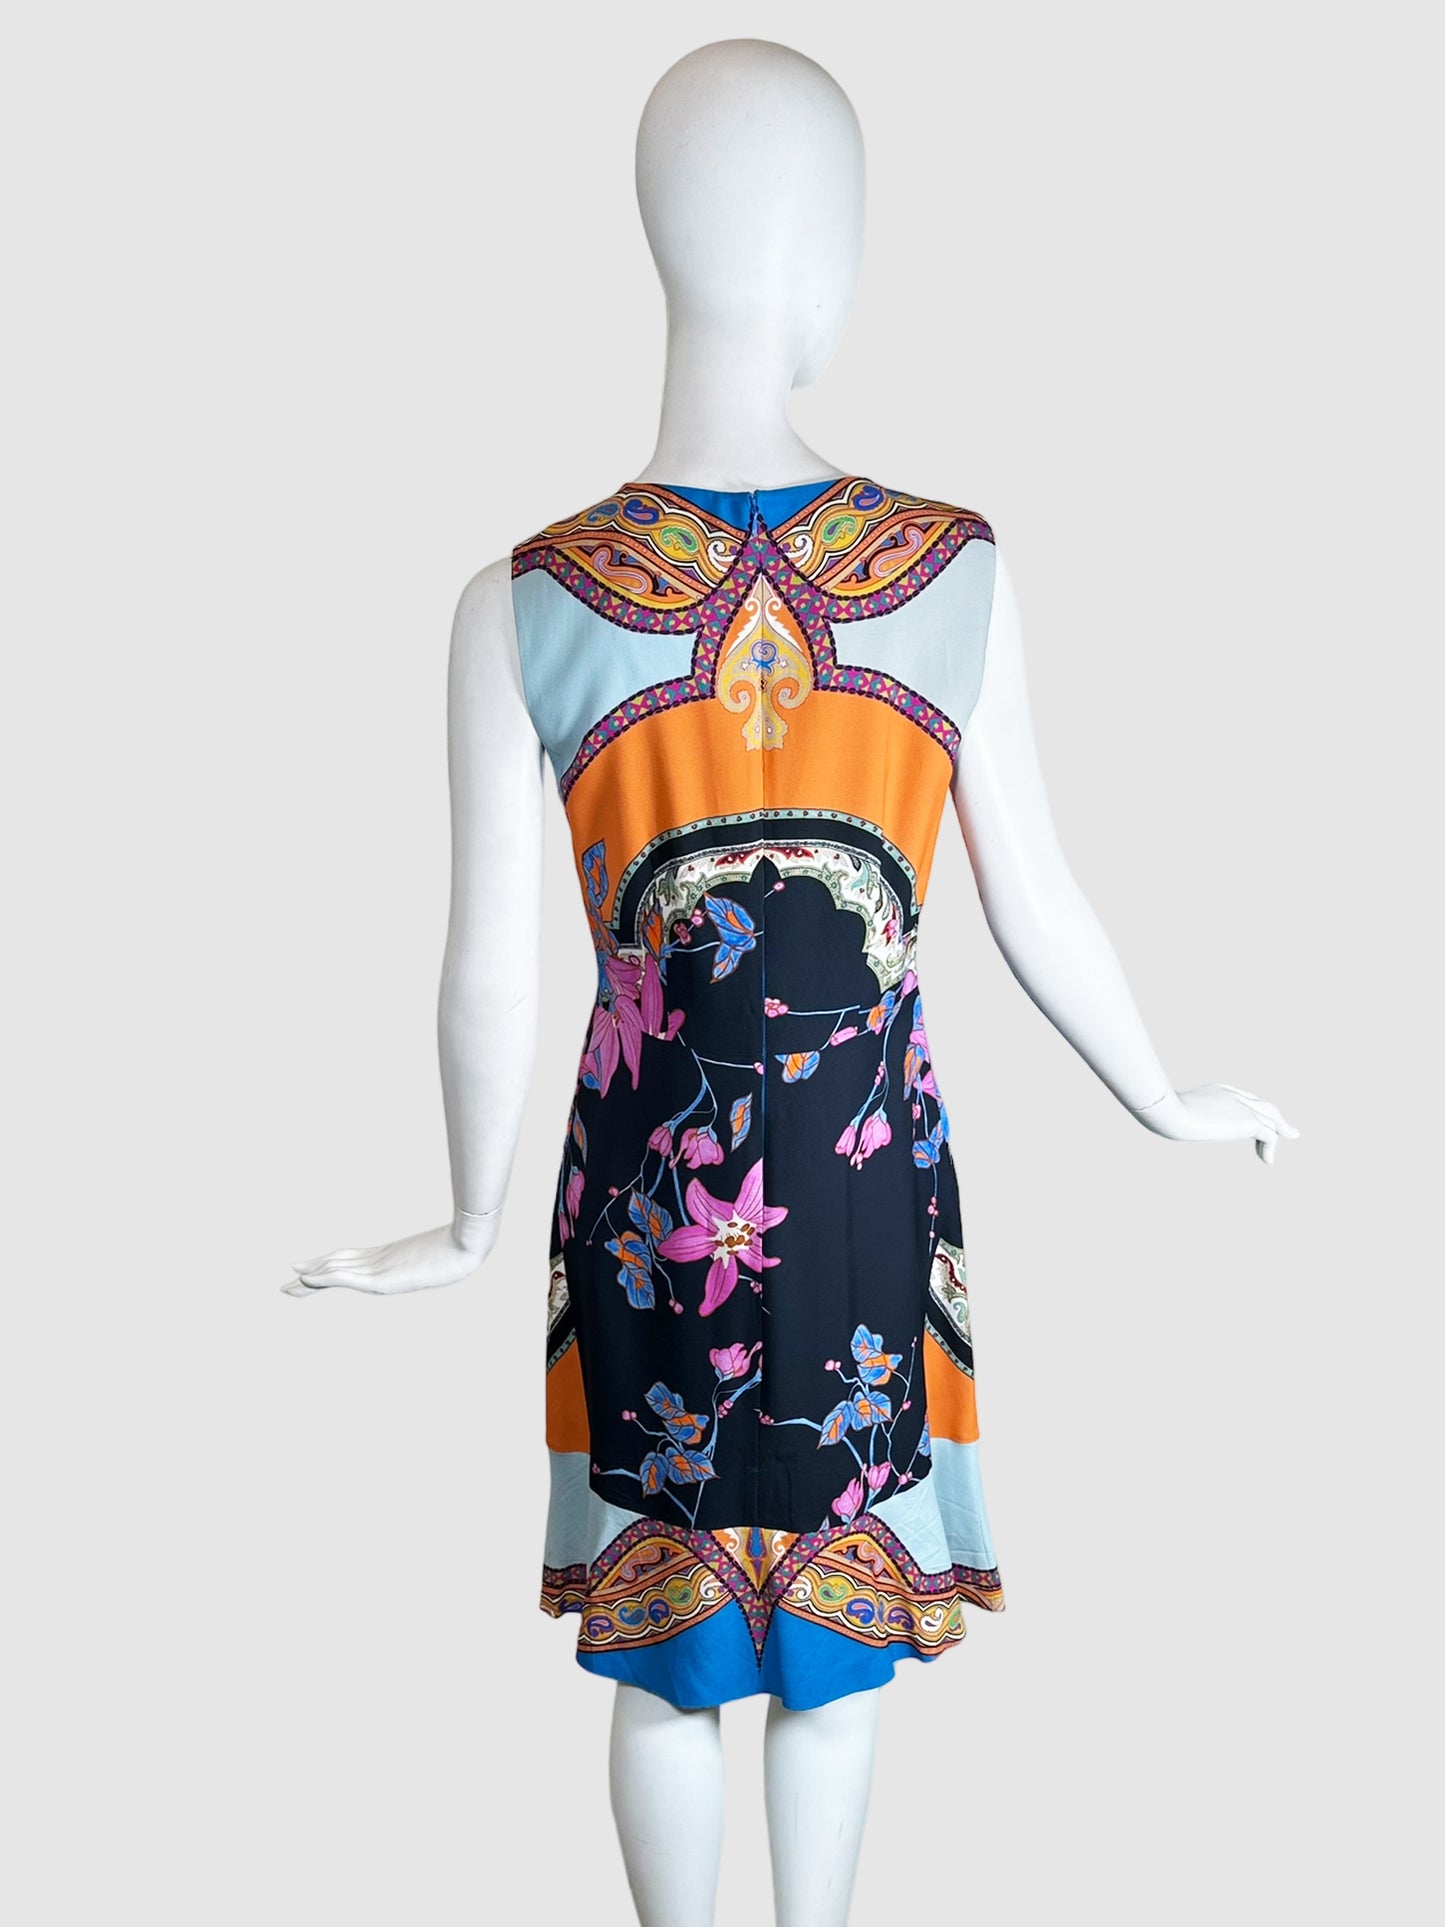 Etro Floral Sleeveless Dress - Size 44(M)